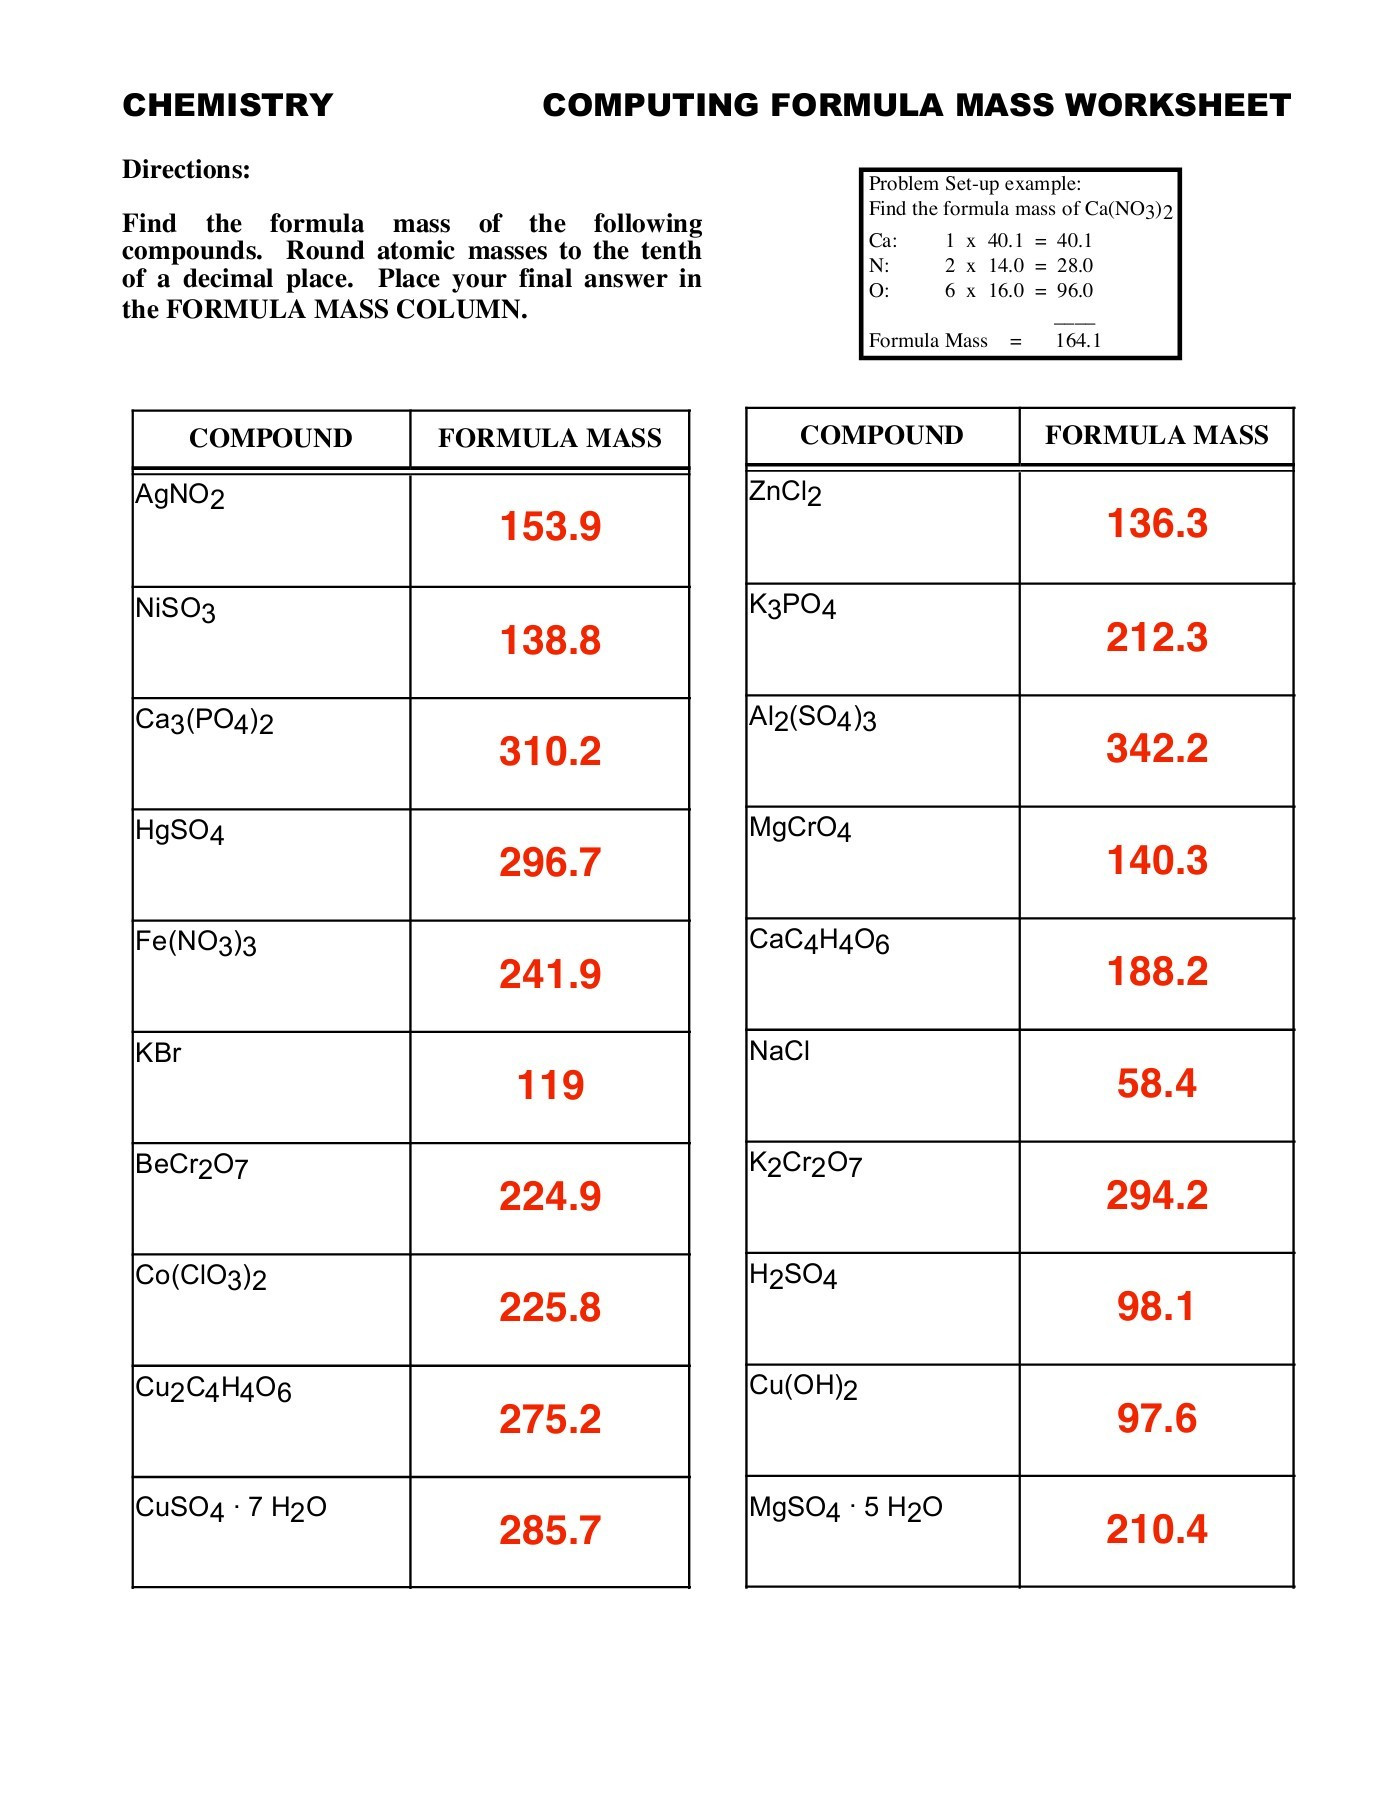 Calculating Average atomic Mass Worksheet Chemistry Puting formula Mass Worksheet Pages 1 21